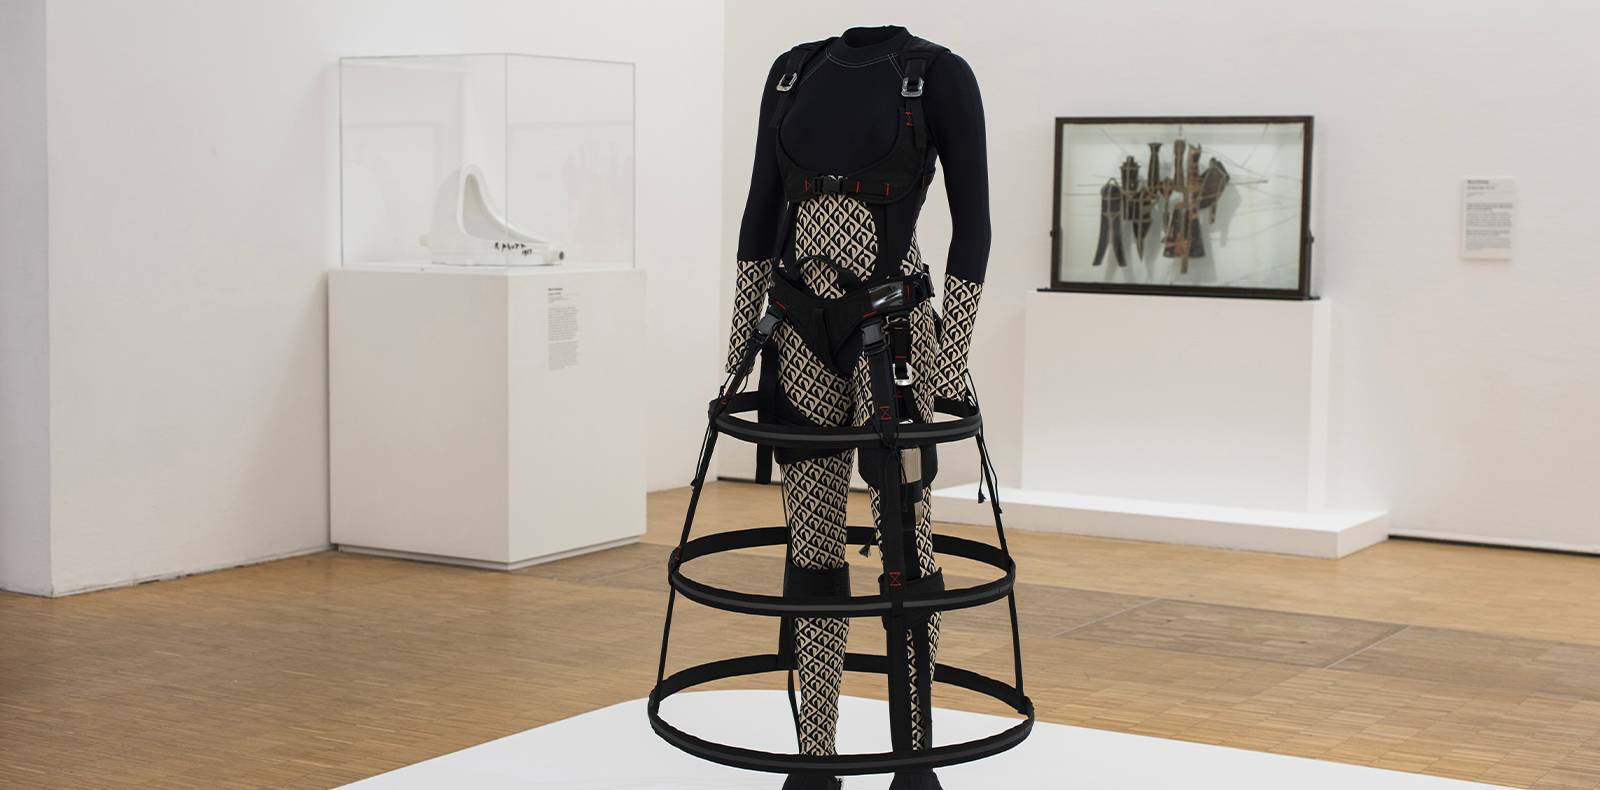 Exposition Centre Pompidou, Laurence Benaïm, Mode, Germanier, Chanel, Issey Miyake